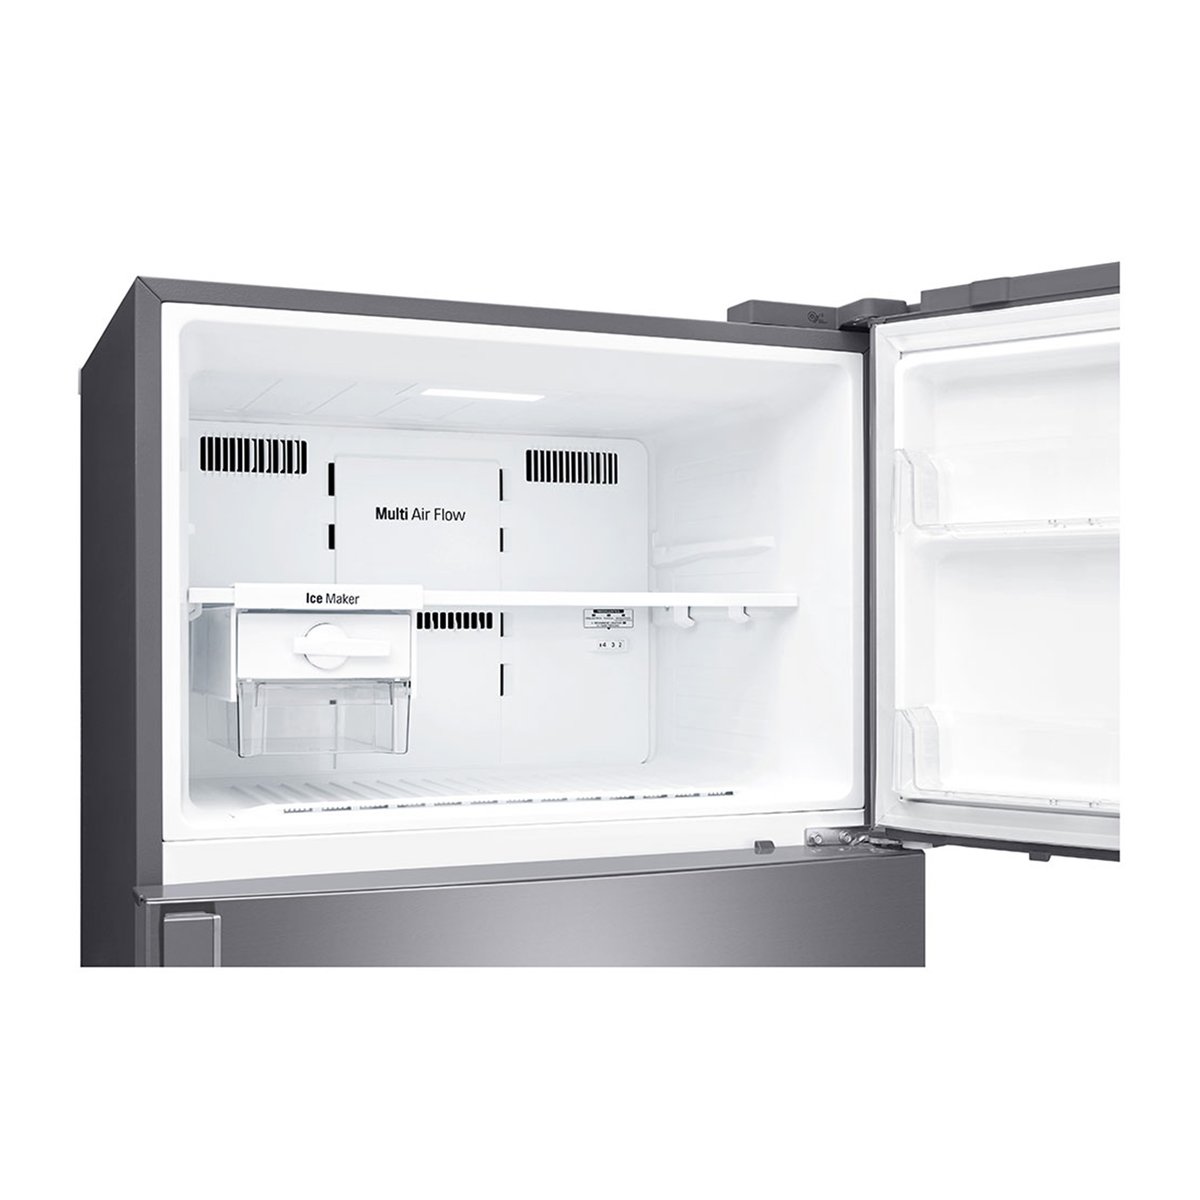 LG Double Door Refrigerator GN-C660HLC 516LTR, NatureFRESH™, LINEARCooling™, DoorCooling+